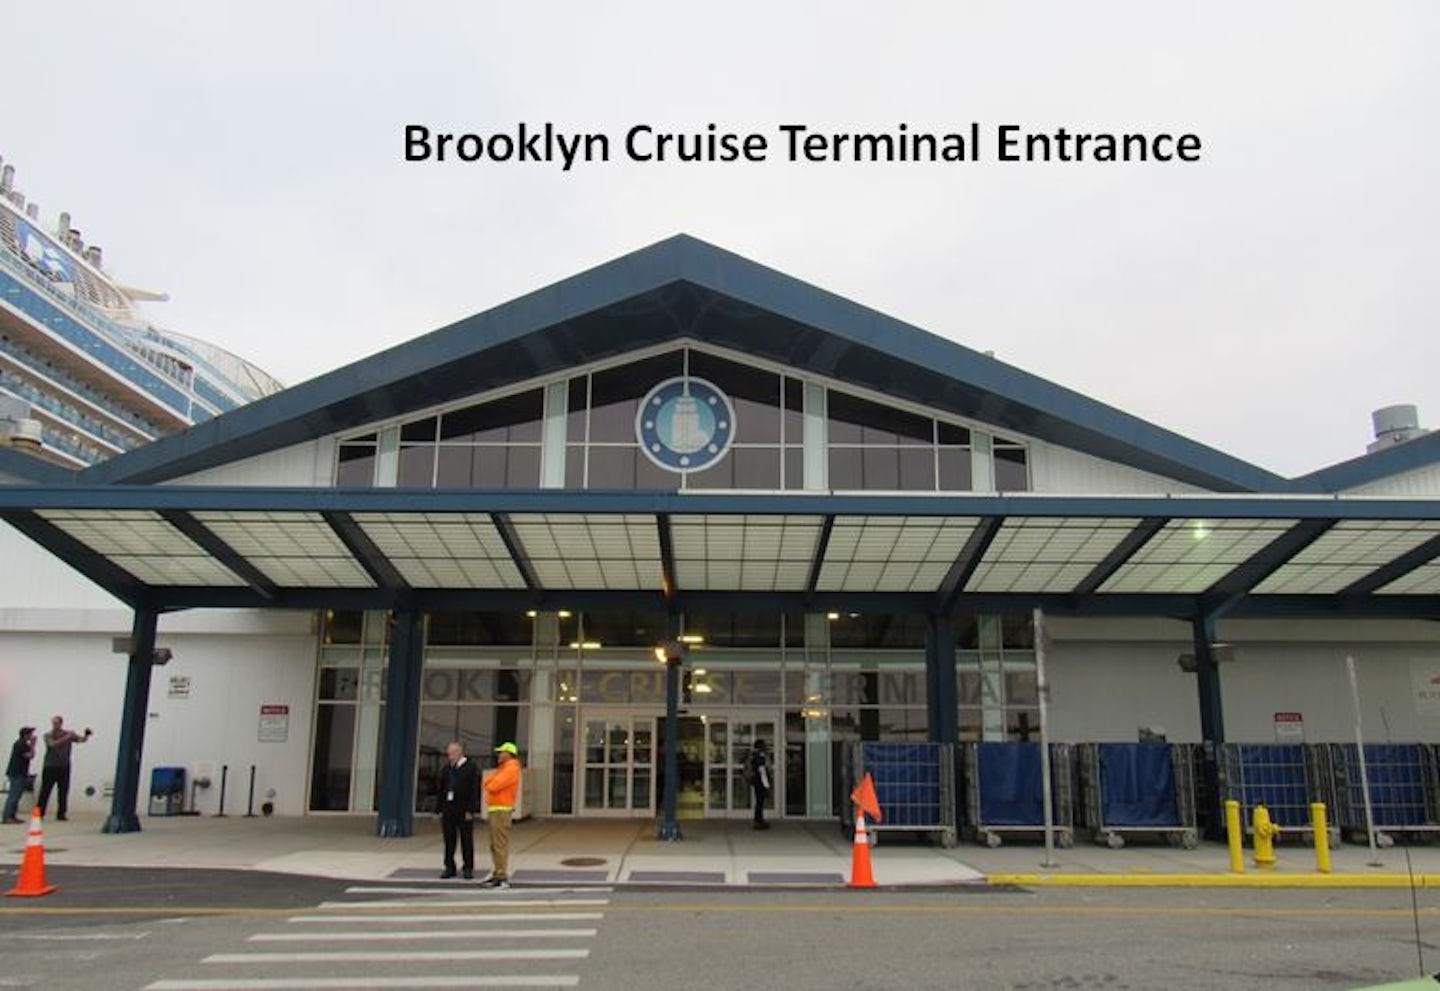 The Brooklyn Cruise Ship Terminal - main entrance.